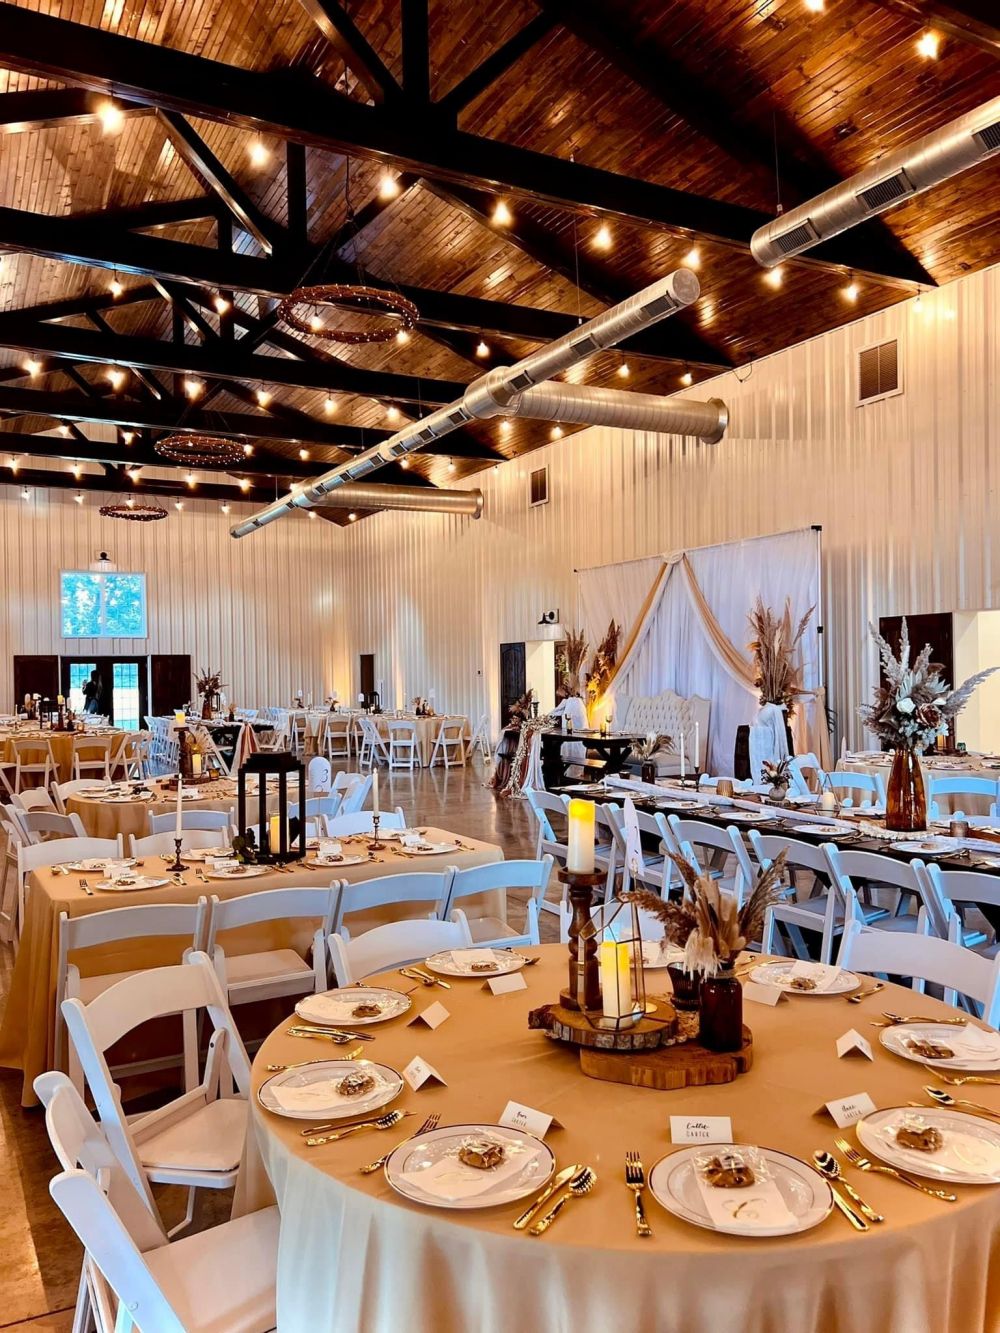 Stay-dine-discover-enjoy-mt-vernon-illinois-wedding-venues